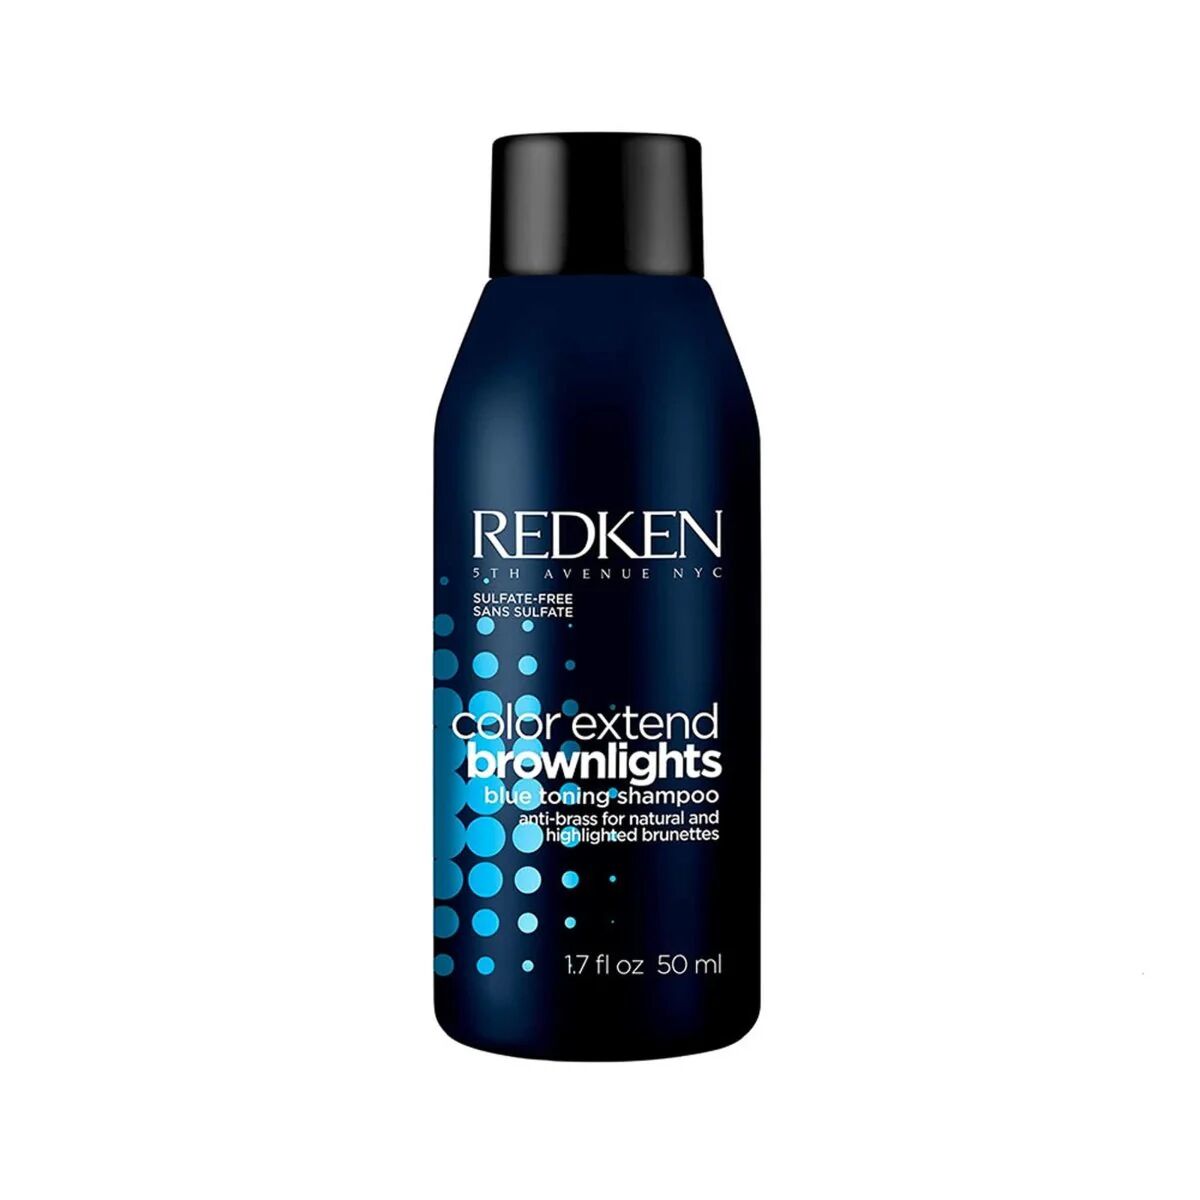 Redken Color Extend Brownlights Shampoo capelli castani 50ml